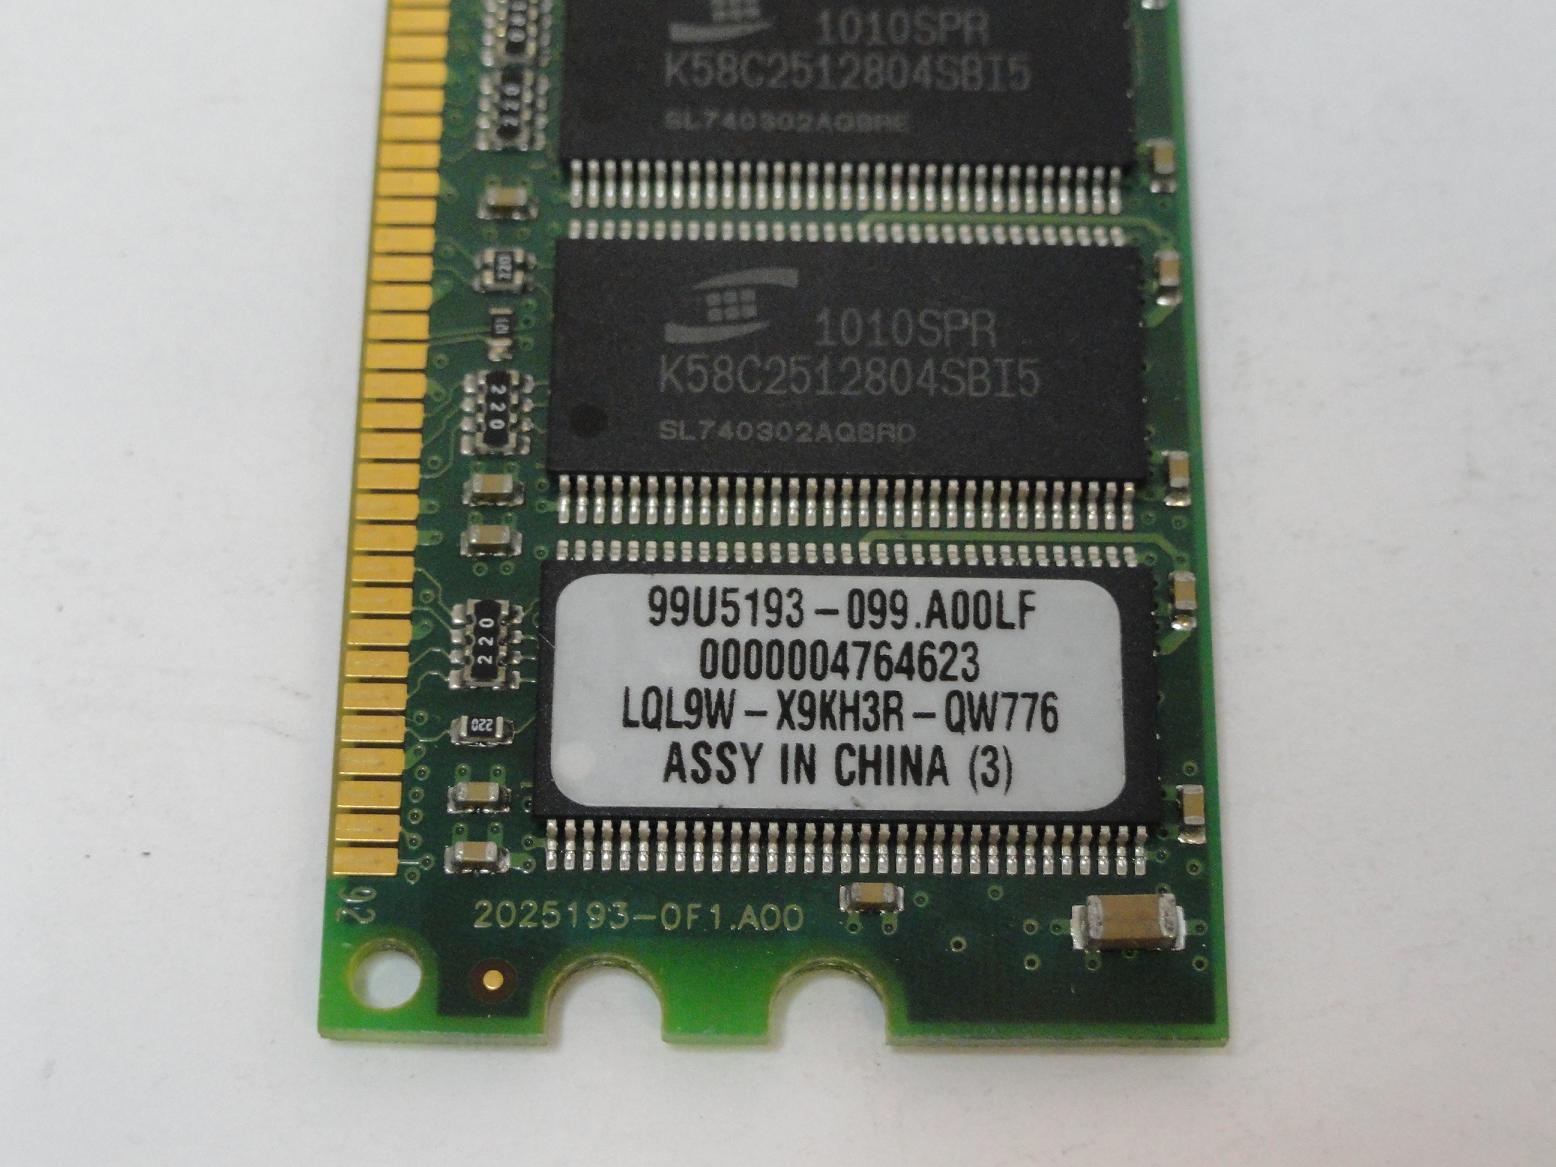 PR25424_99U5193-099.A00LF_Kingston 1GB PC2700 DDR-333MHz DIMM RAM - Image3